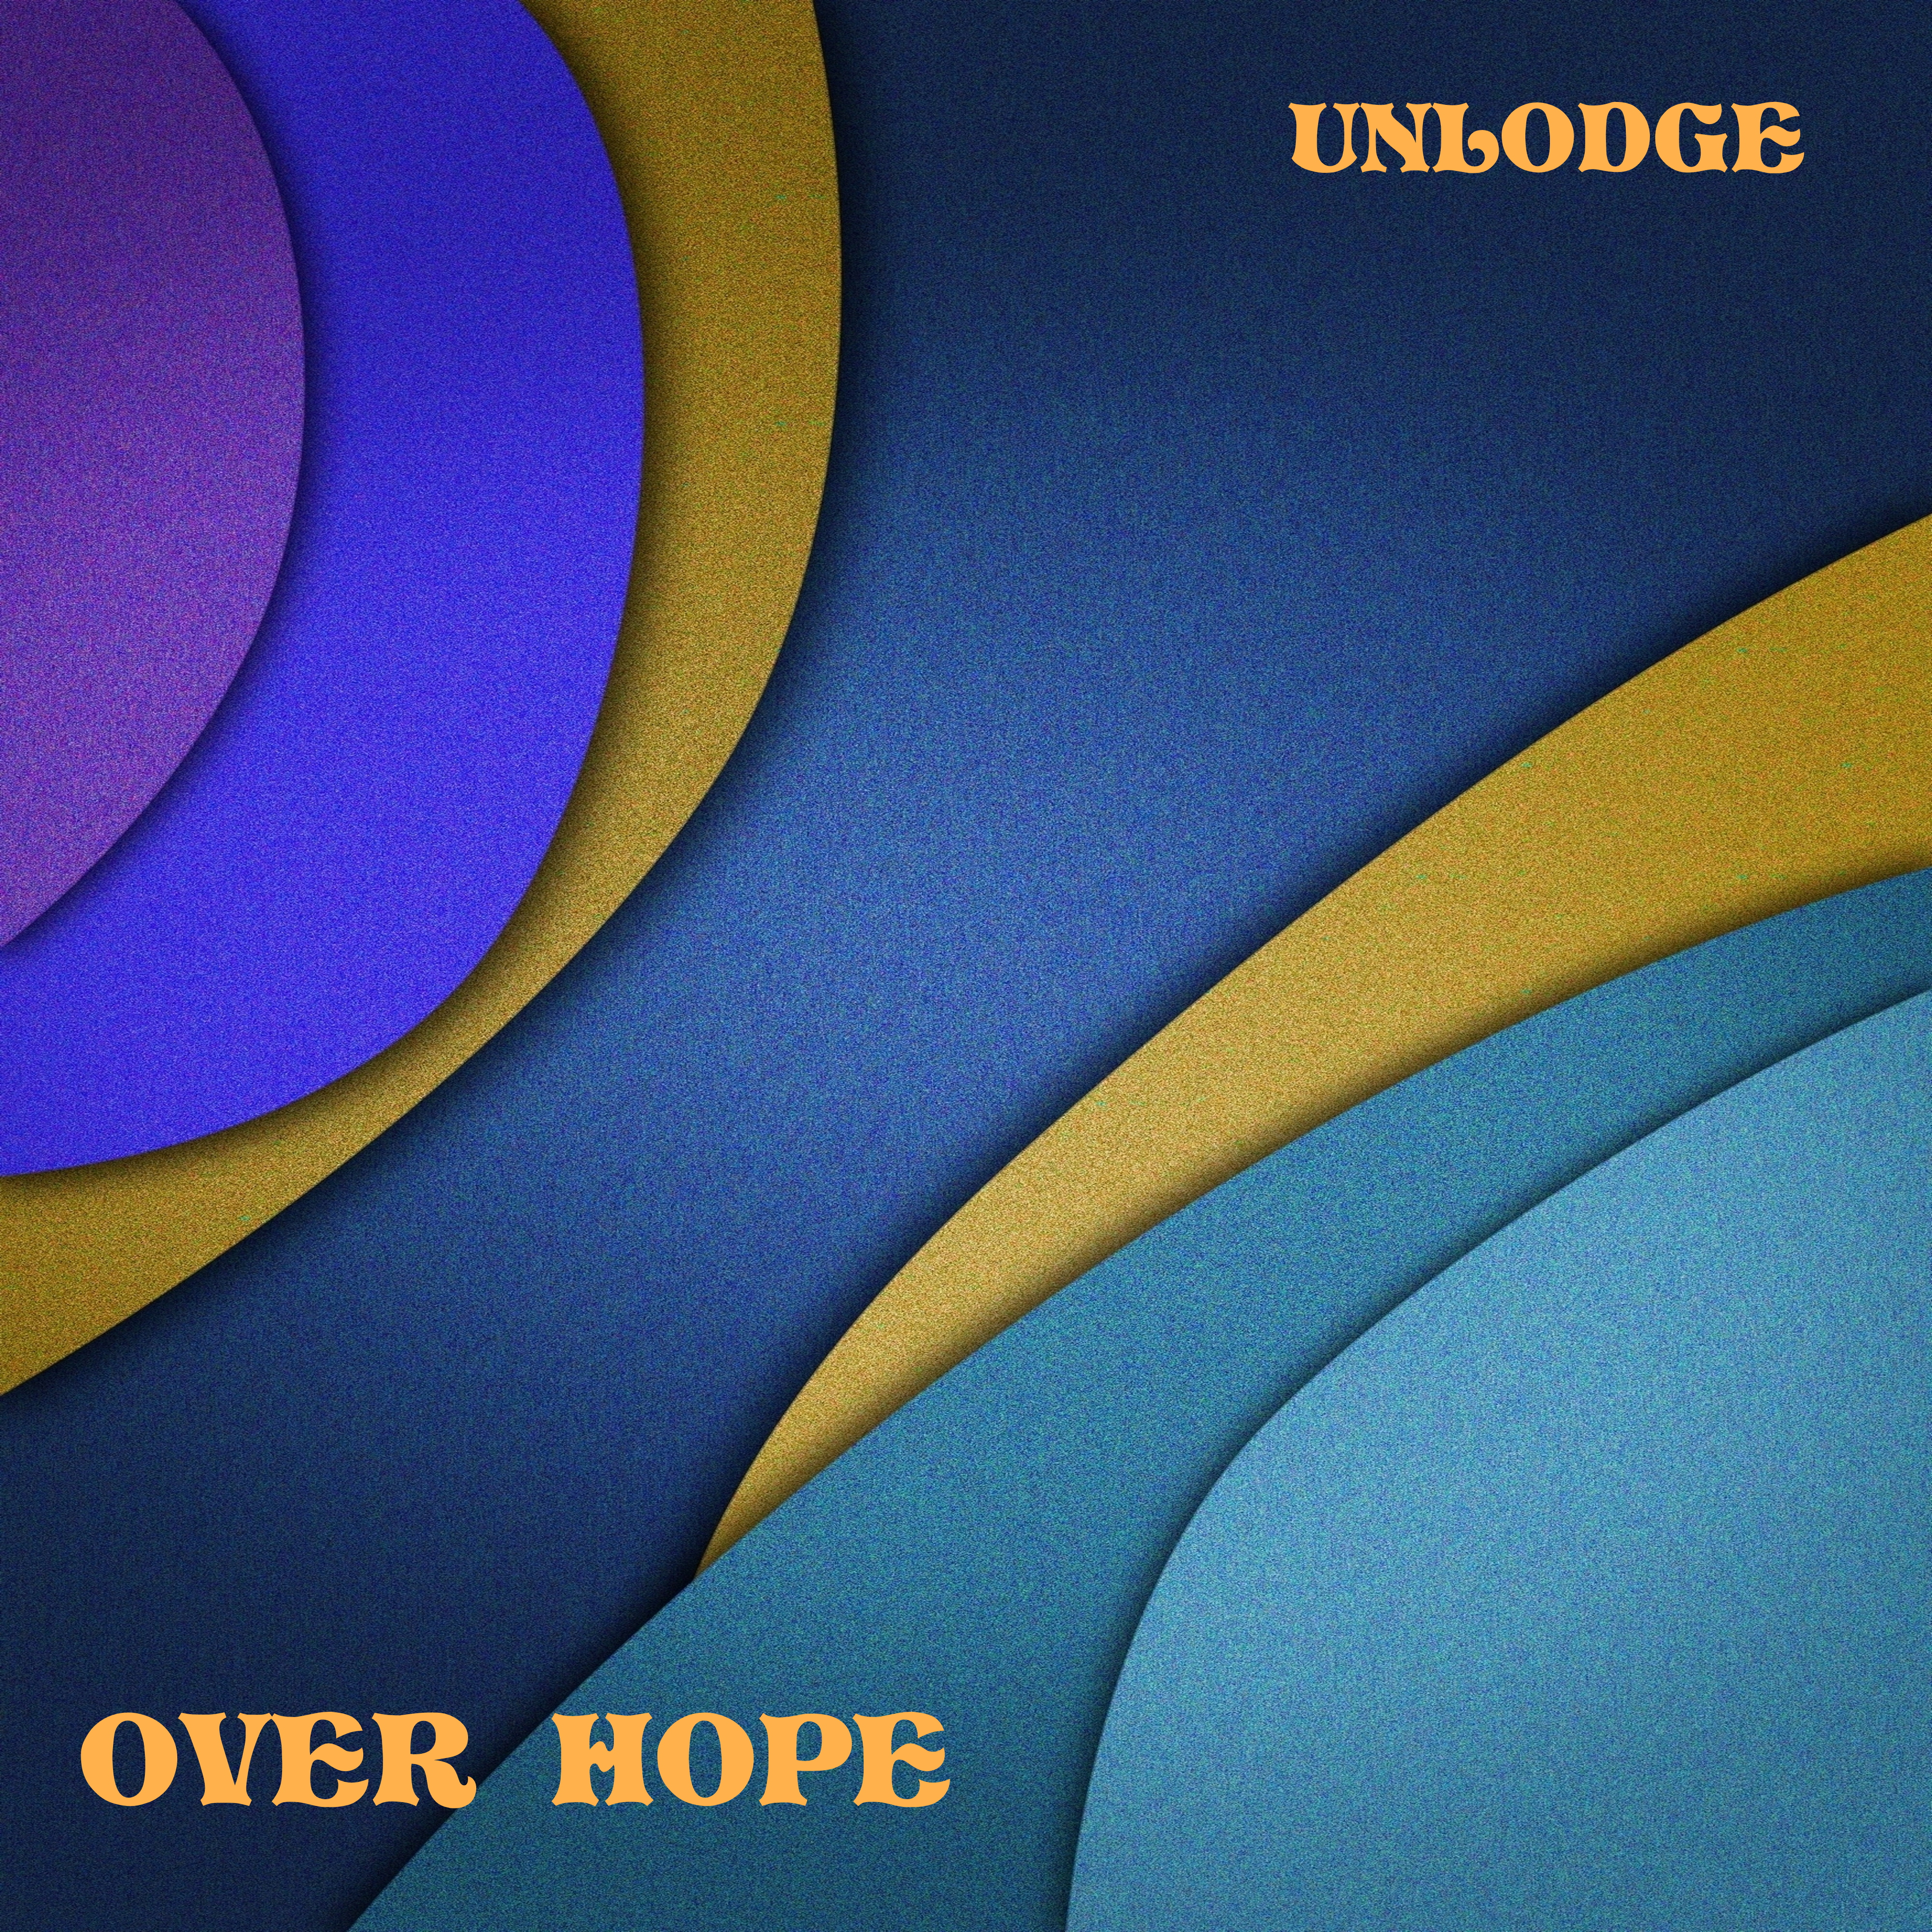 Hope over. Unlodge.